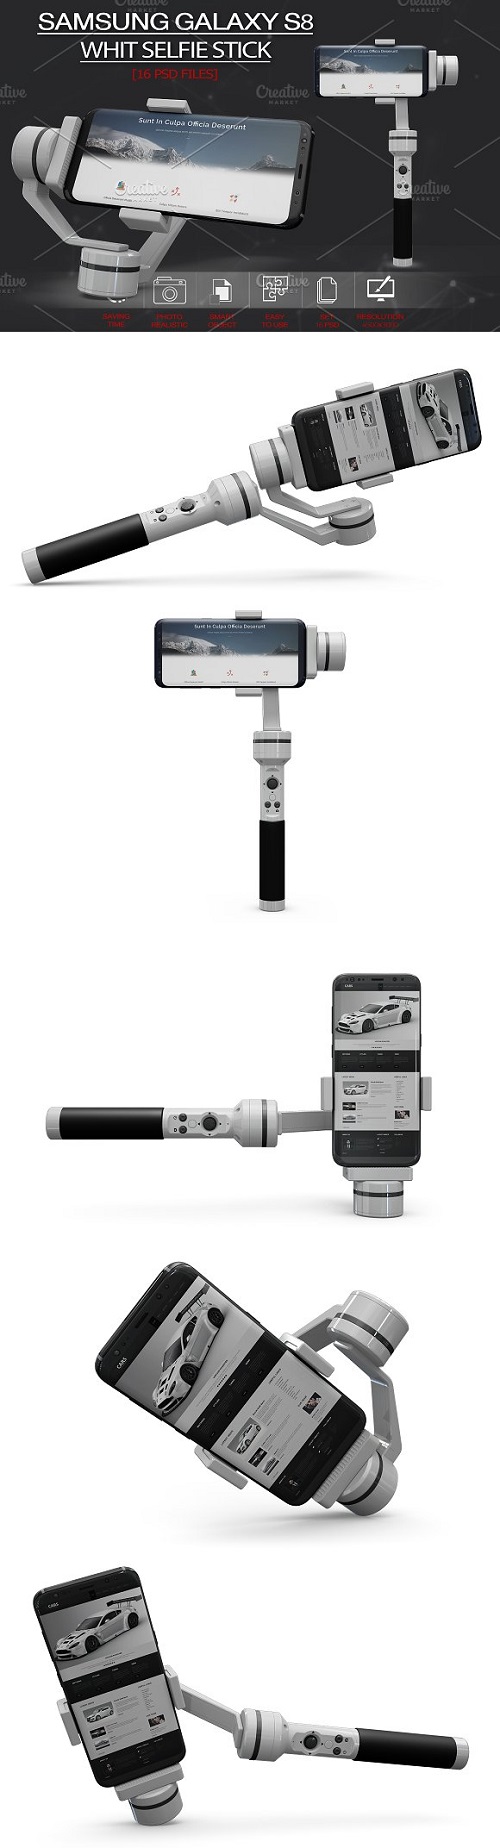 Selfie Samsung Galaxy S8 Mockup 2108315